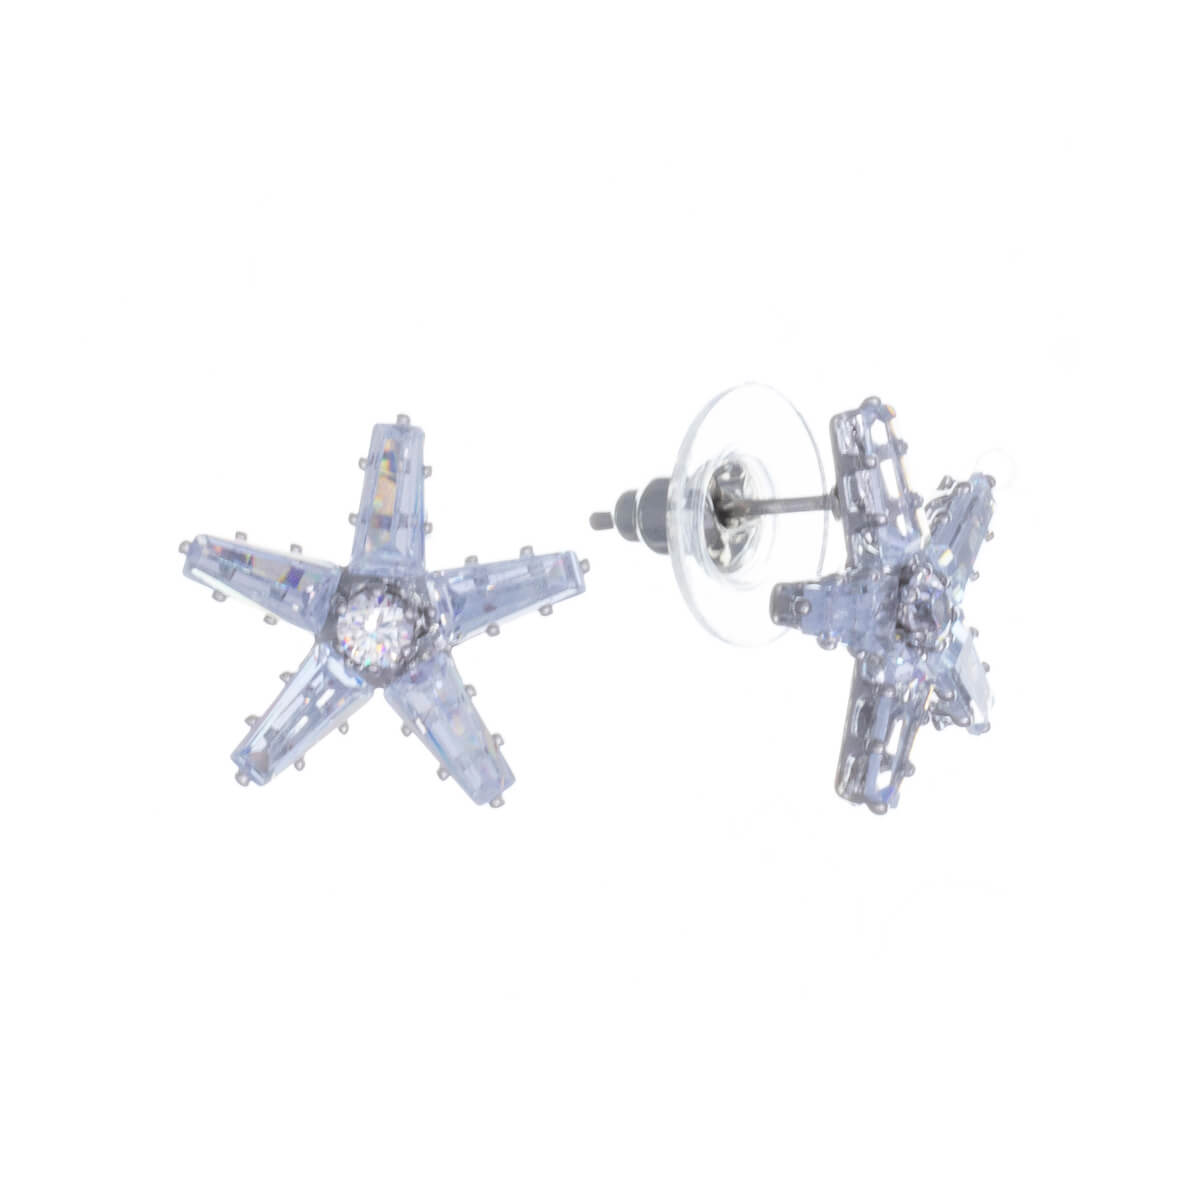 Sparkling stone starfish earrings